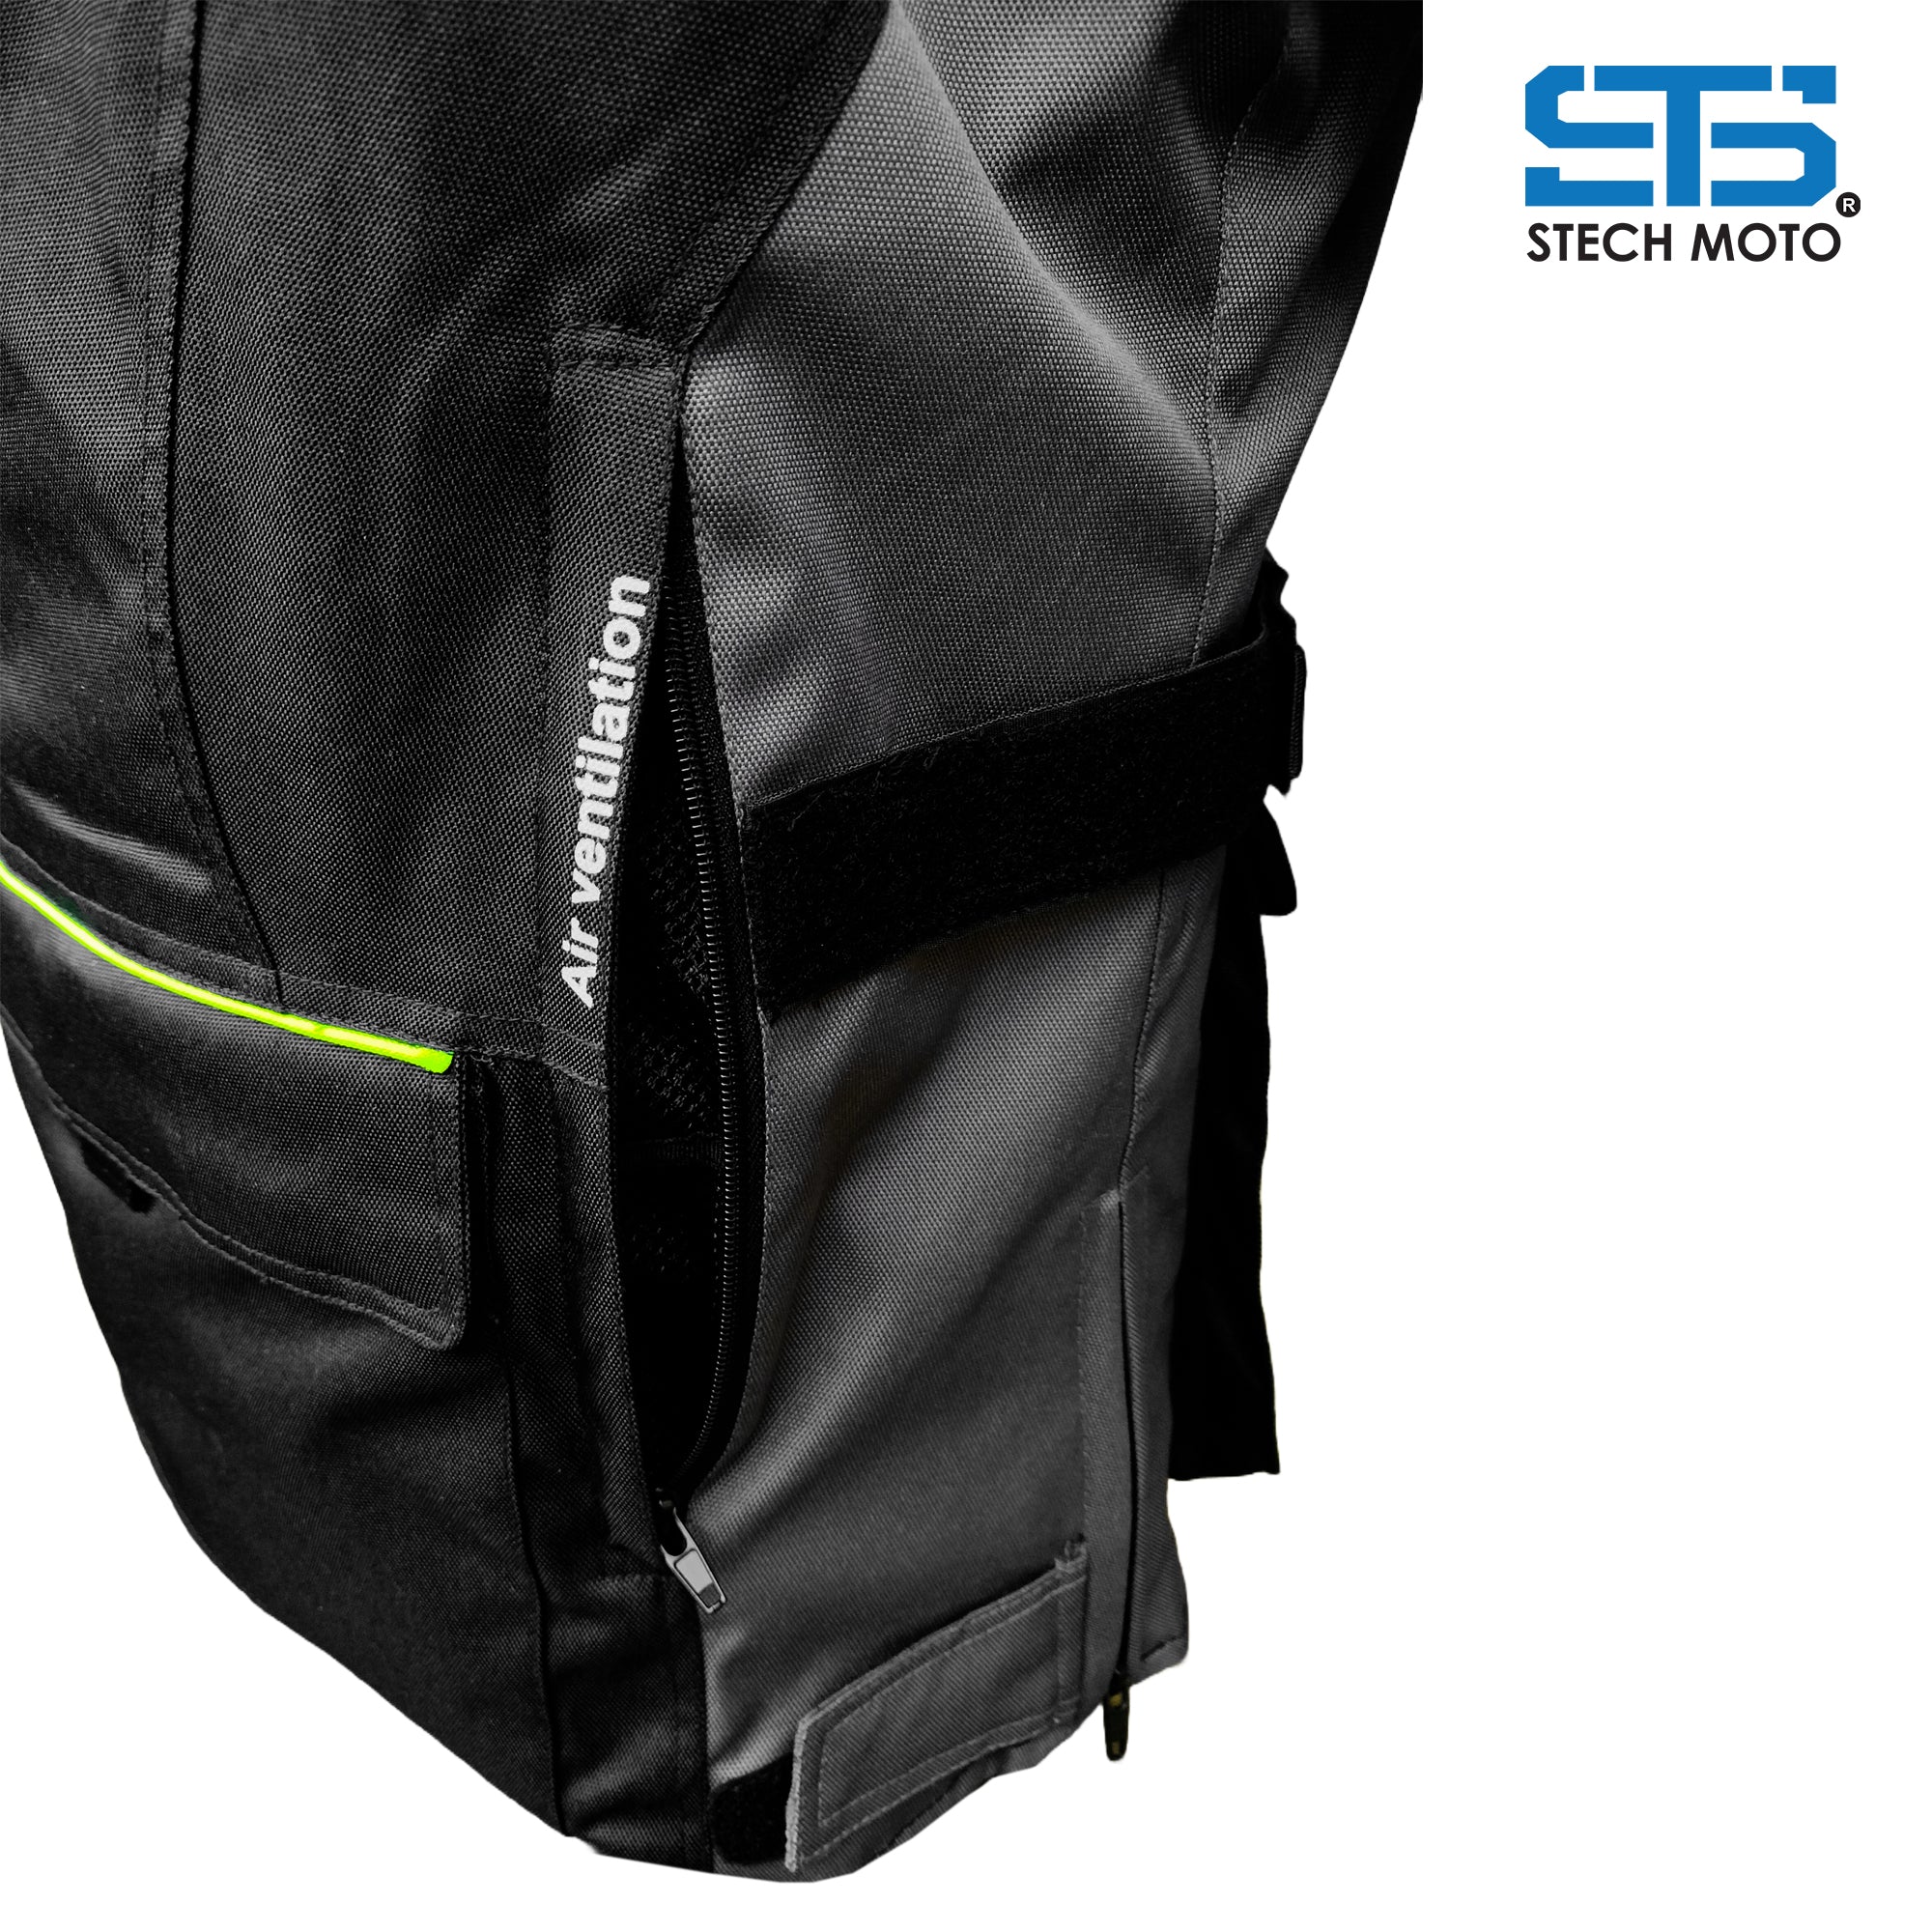 Moto giacca in tessuto stechmoto ST 820 MXP Tourer H2Out 3 strati 4 Stagione